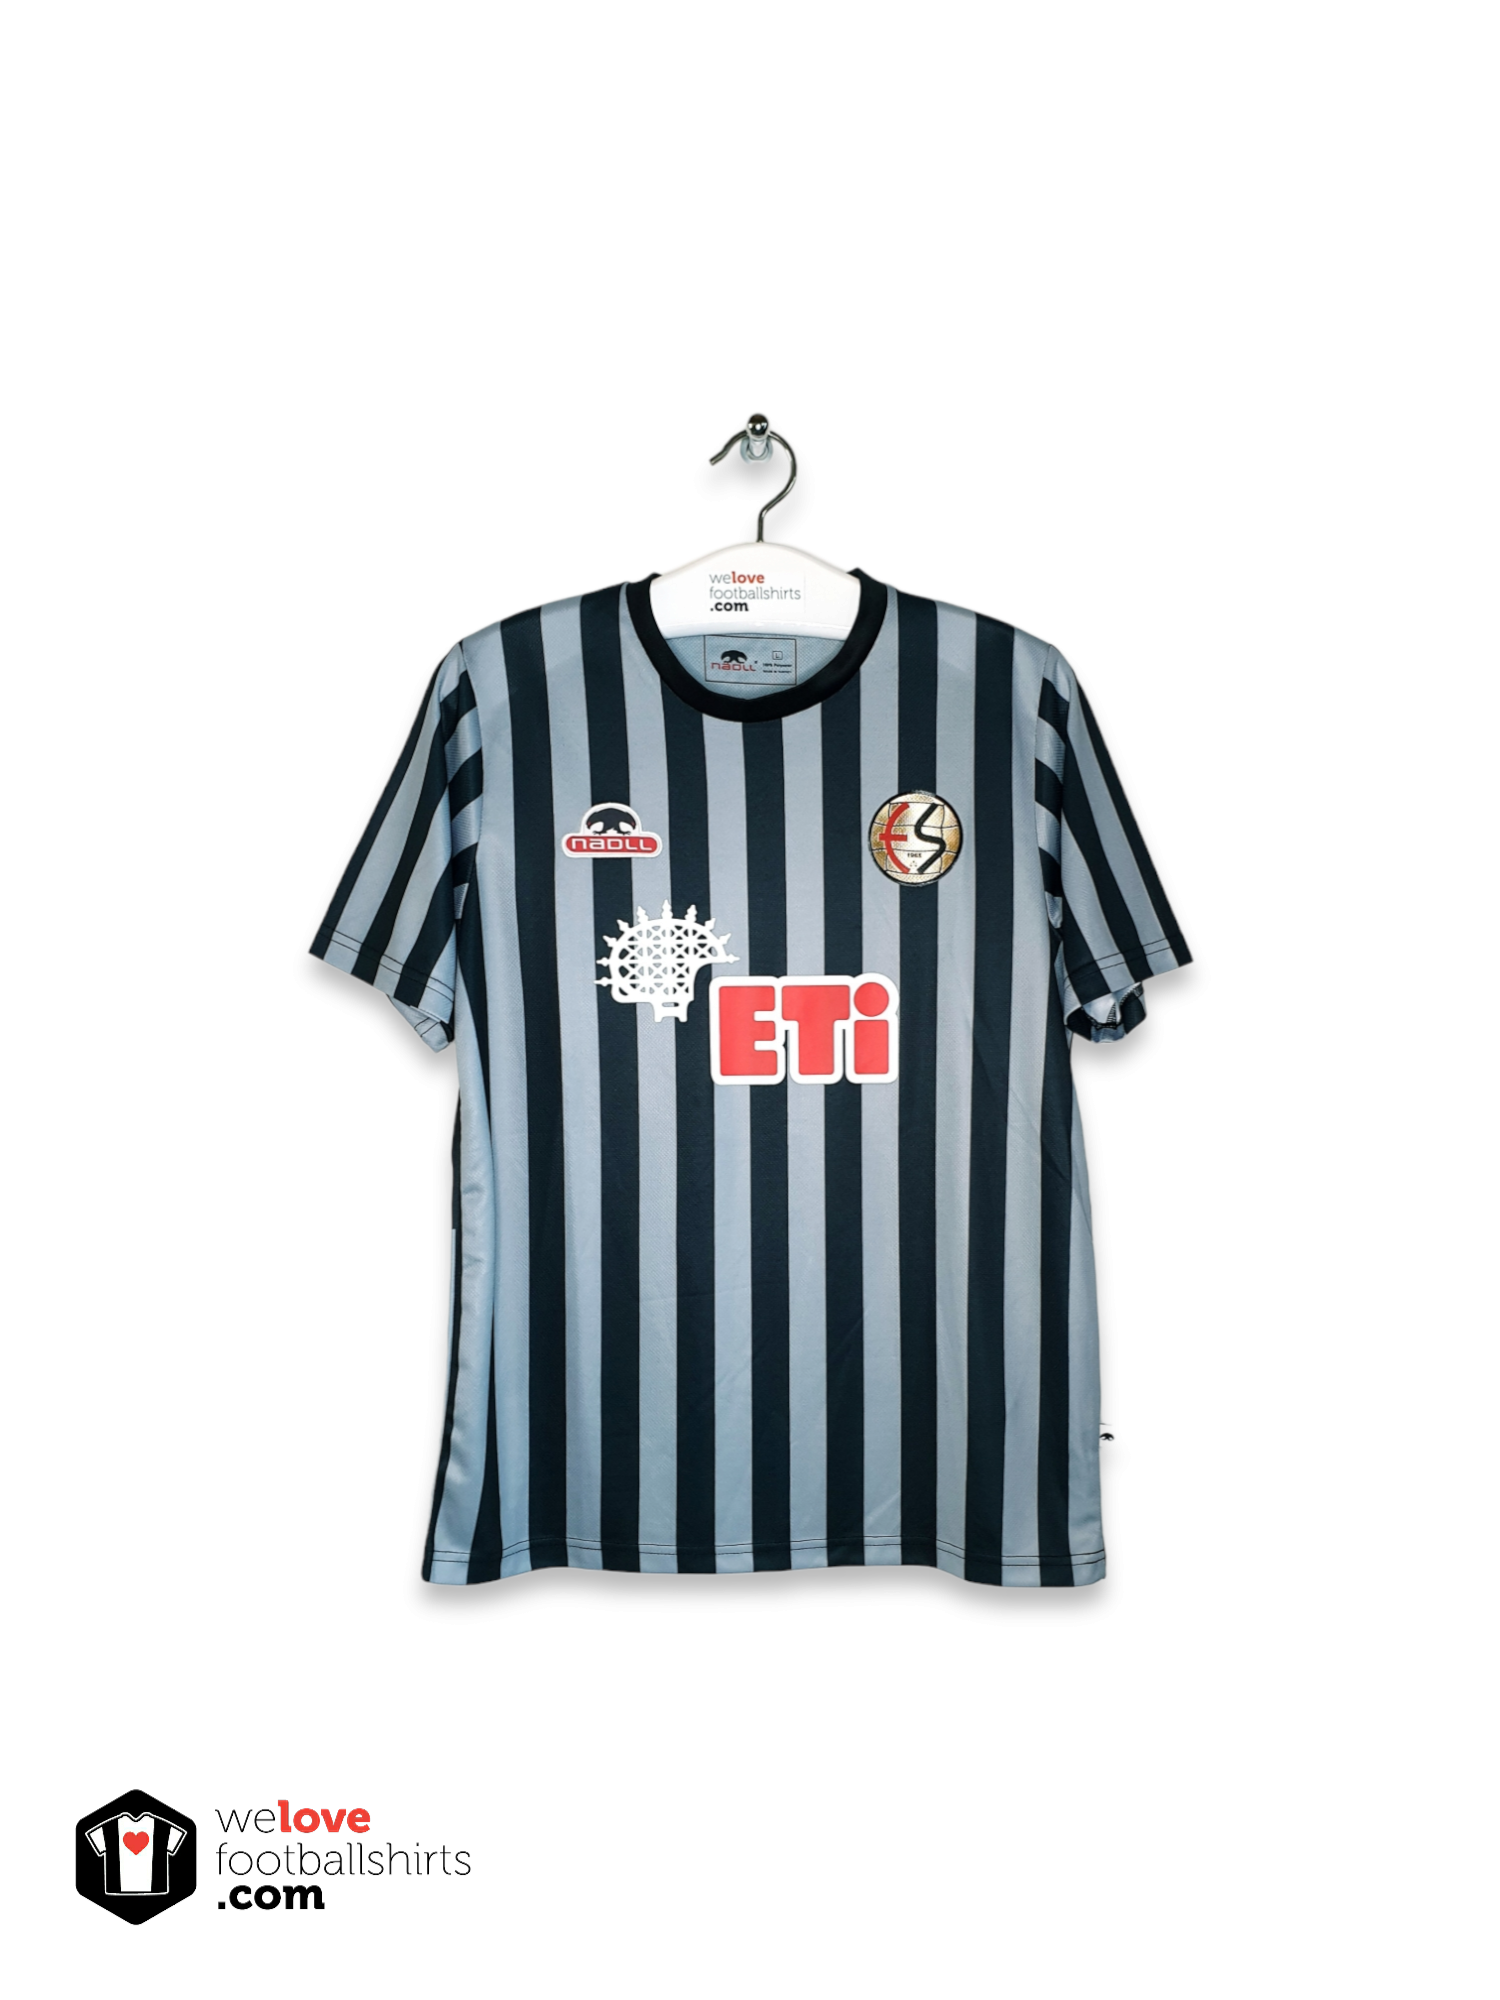 Old FK Radnički Niš football shirts and soccer jerseys